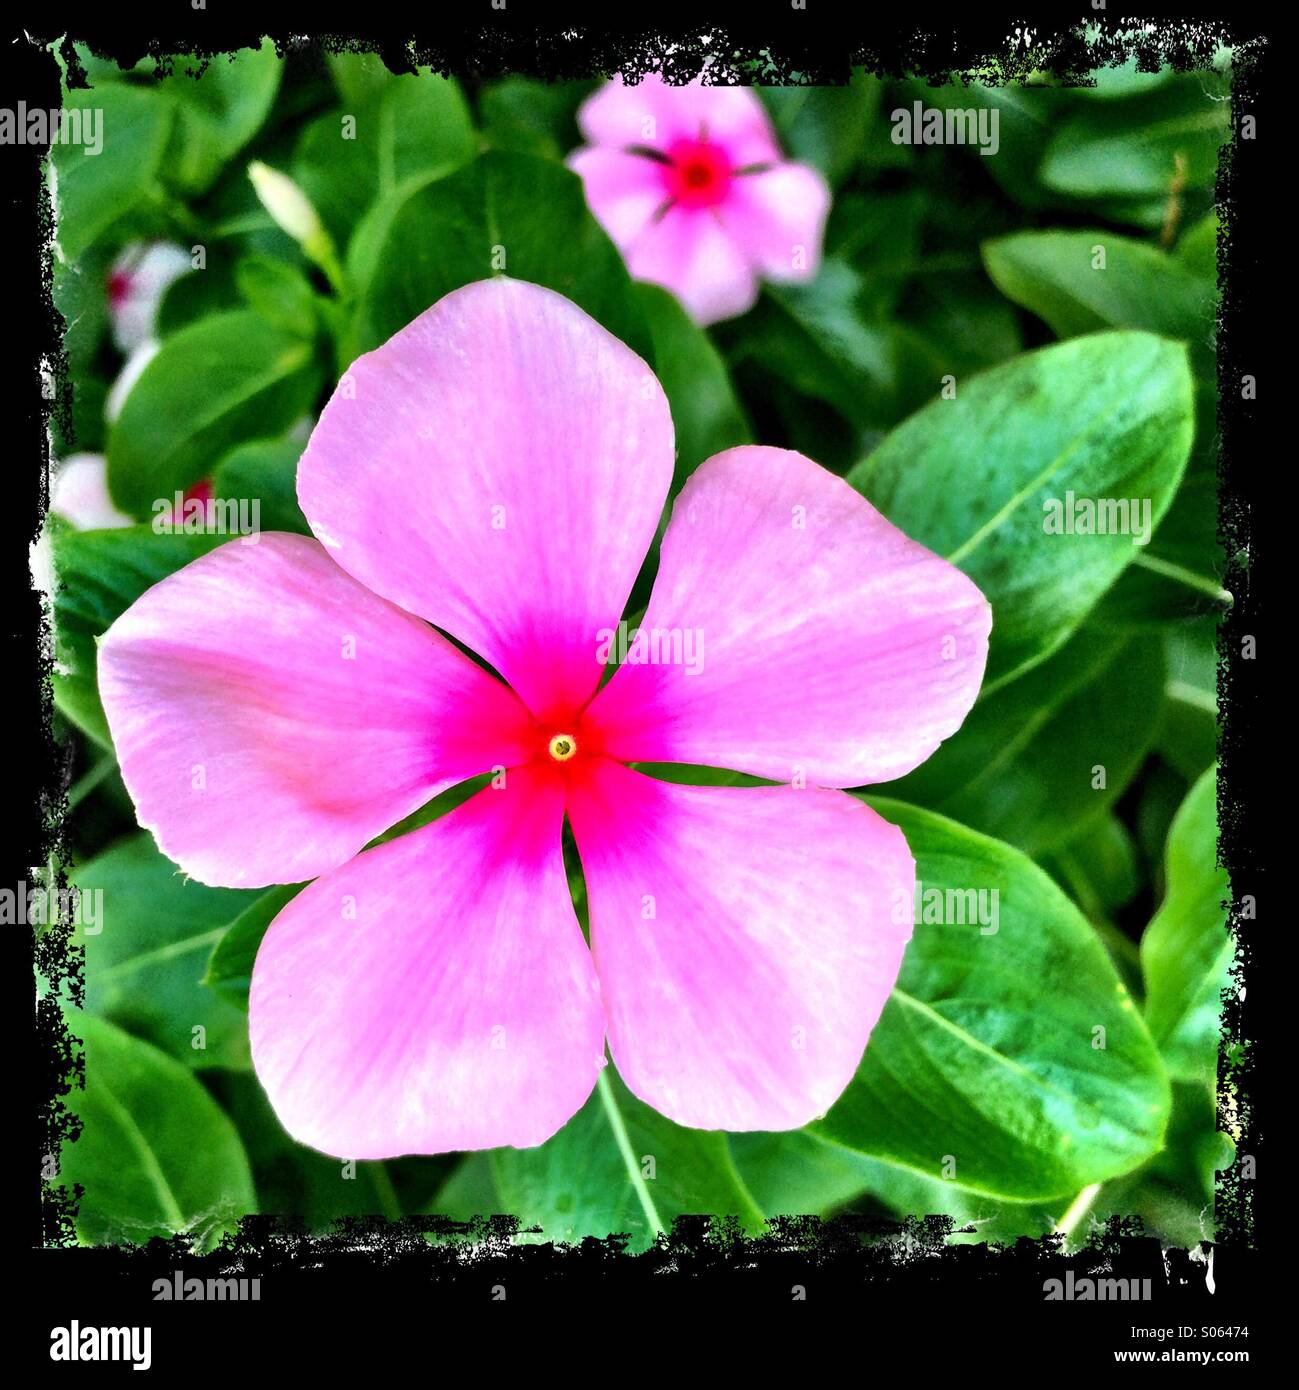 Pink vinca or periwinkle flower Stock Photo